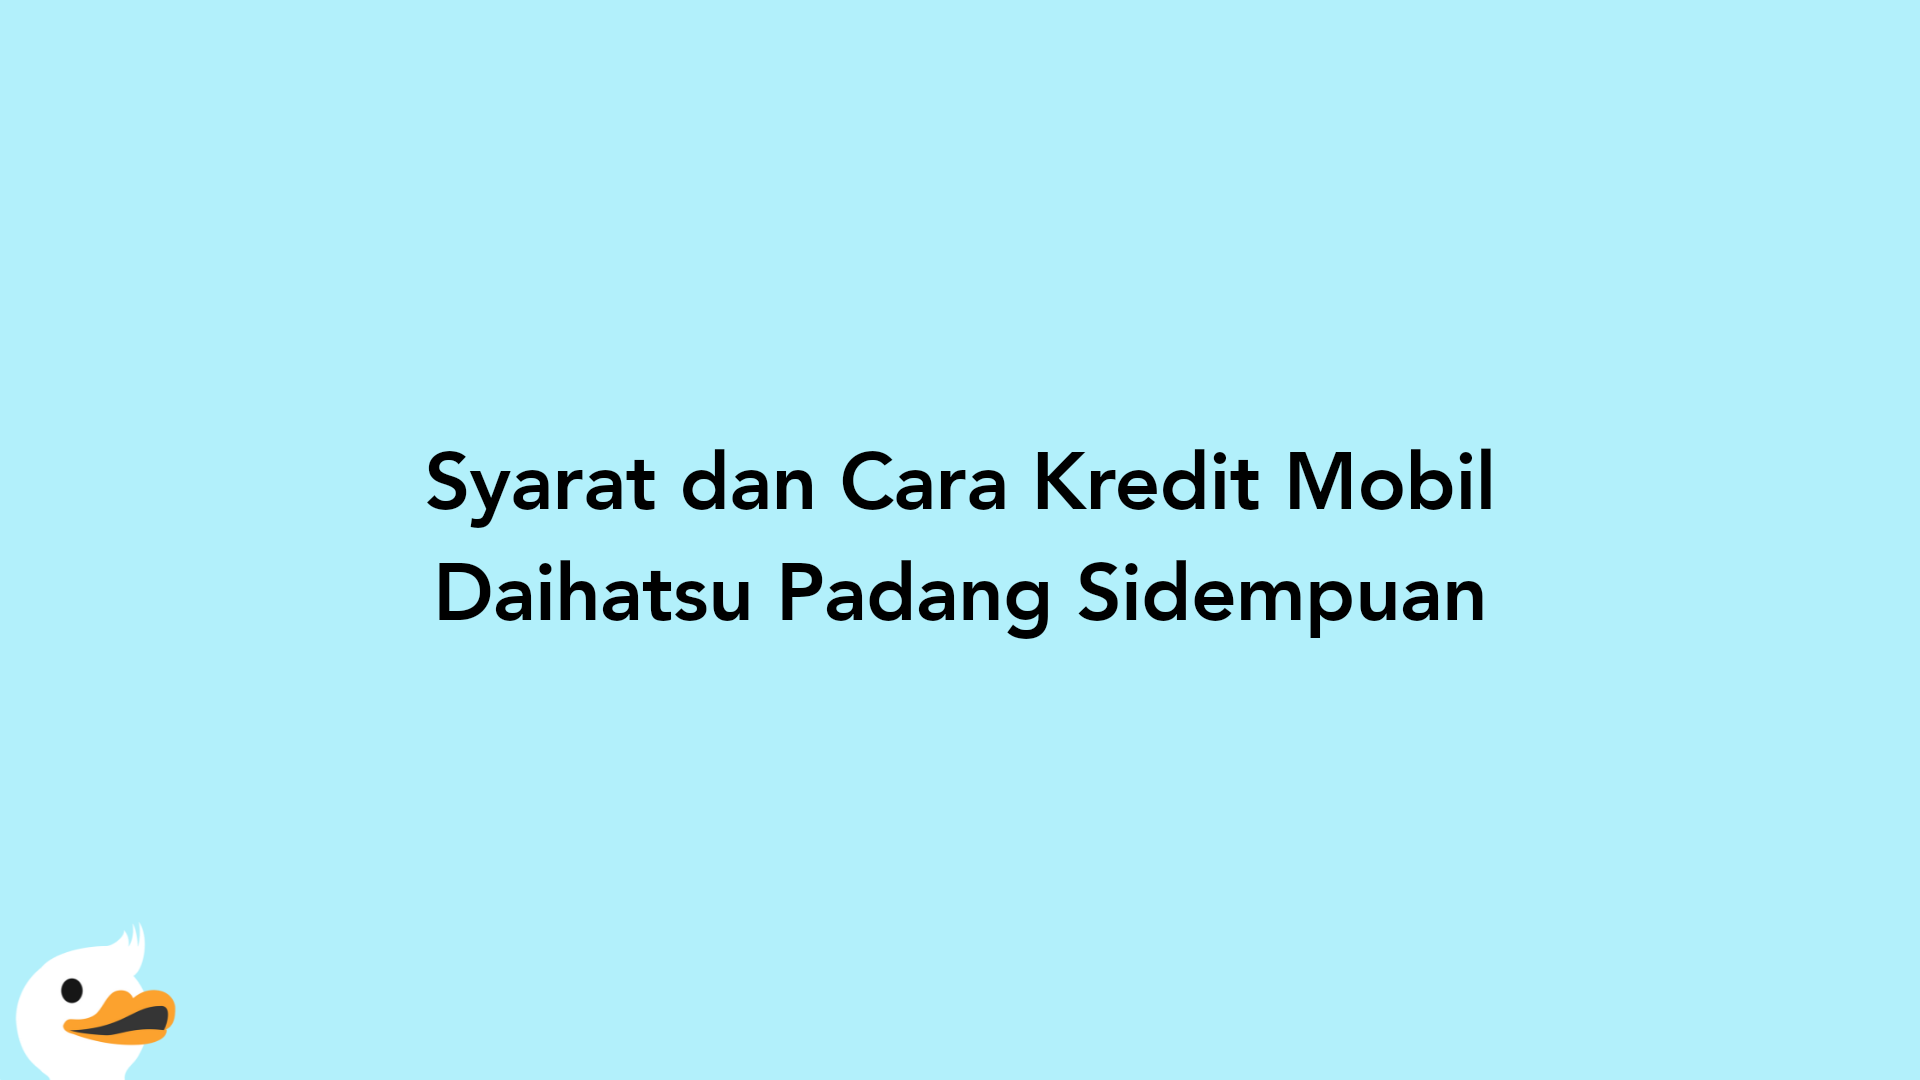 Syarat dan Cara Kredit Mobil Daihatsu Padang Sidempuan